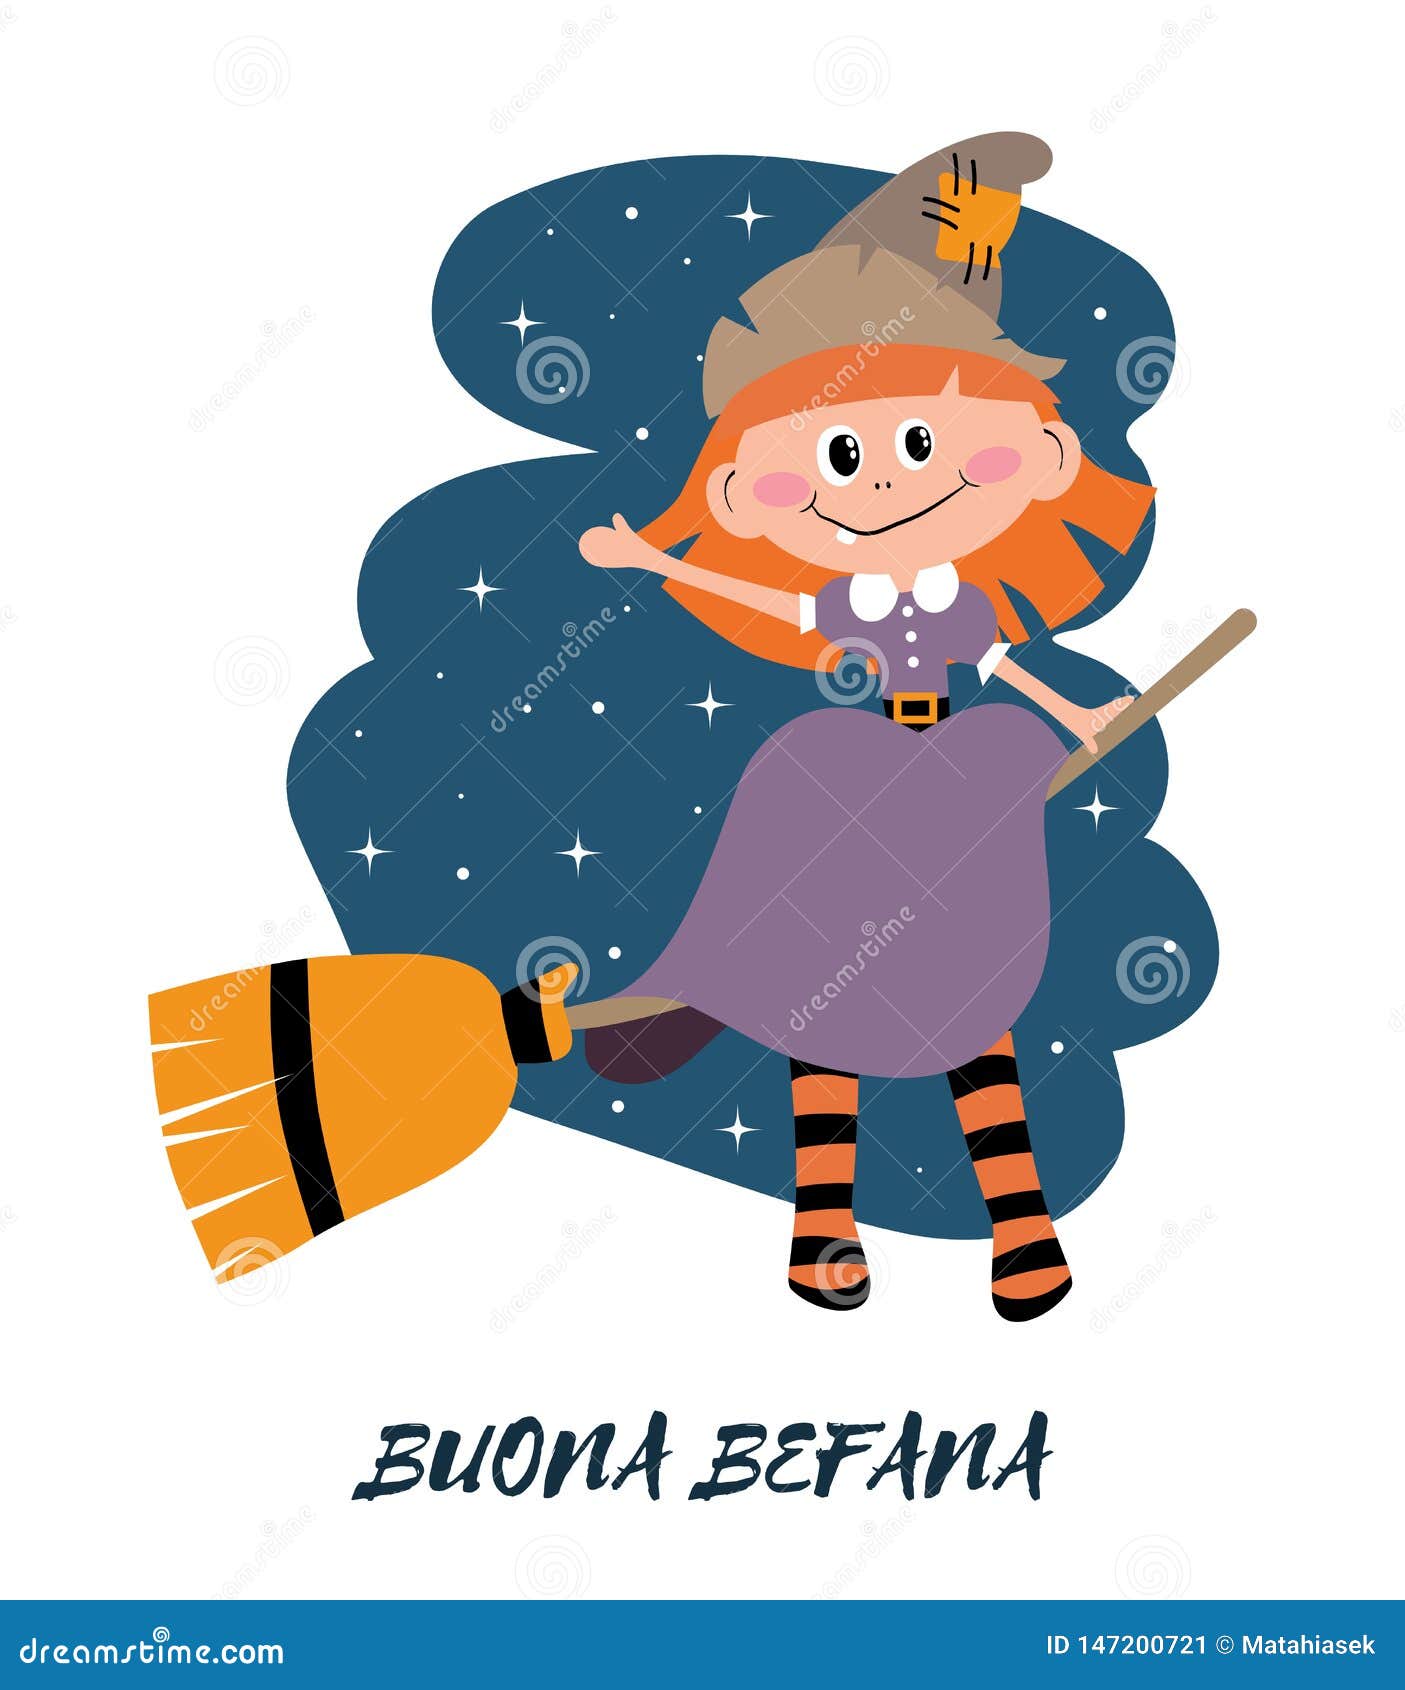 Arriva la Befana - Italian translation - Befana Arrives. Cute